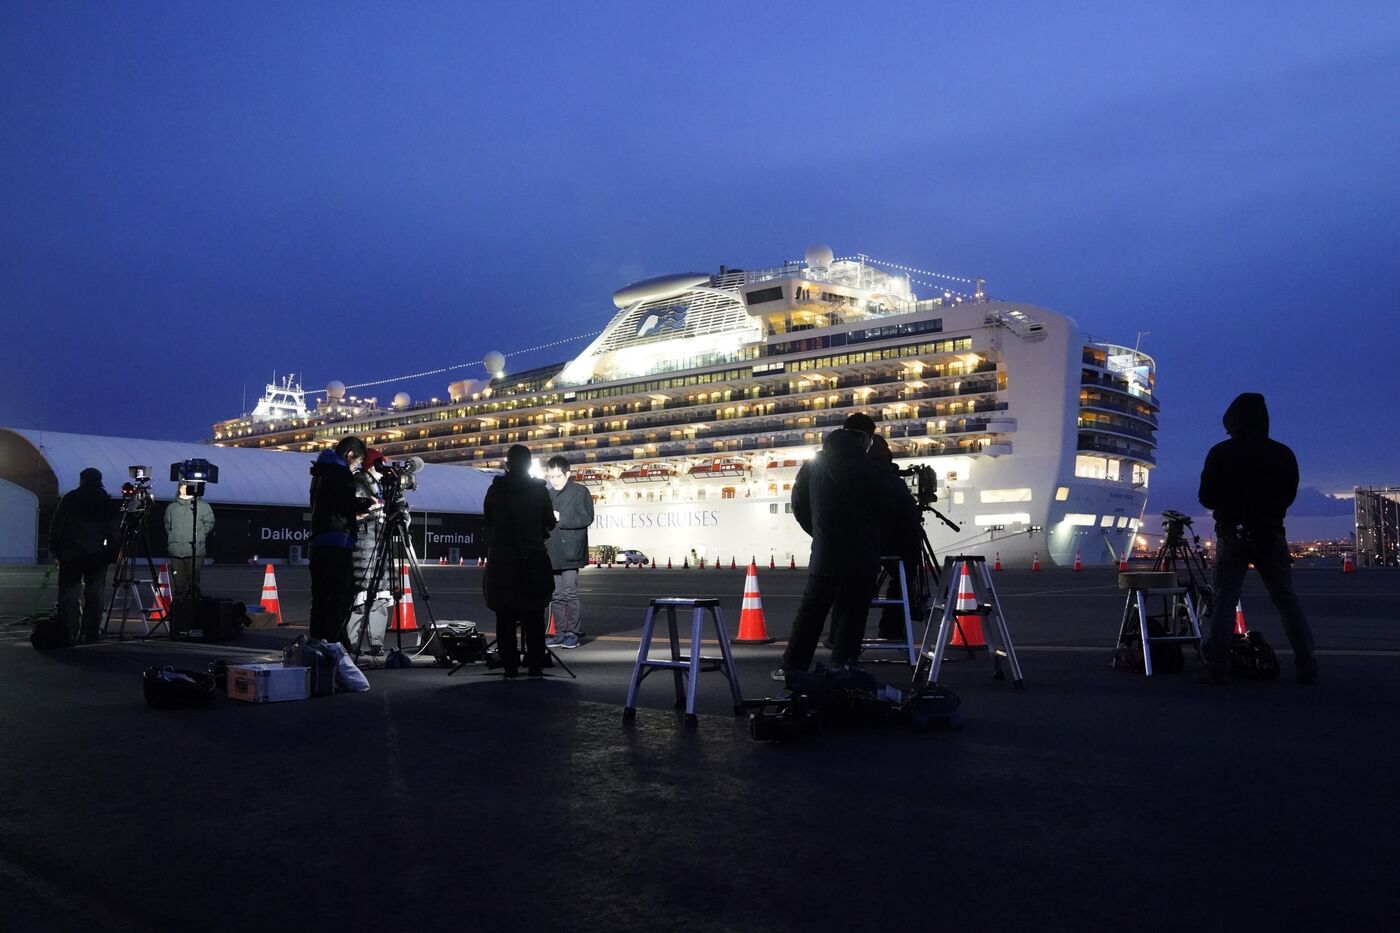 Japan Finds 39 New Cases of Virus on Cruise Ship Quarantined in Yokohama